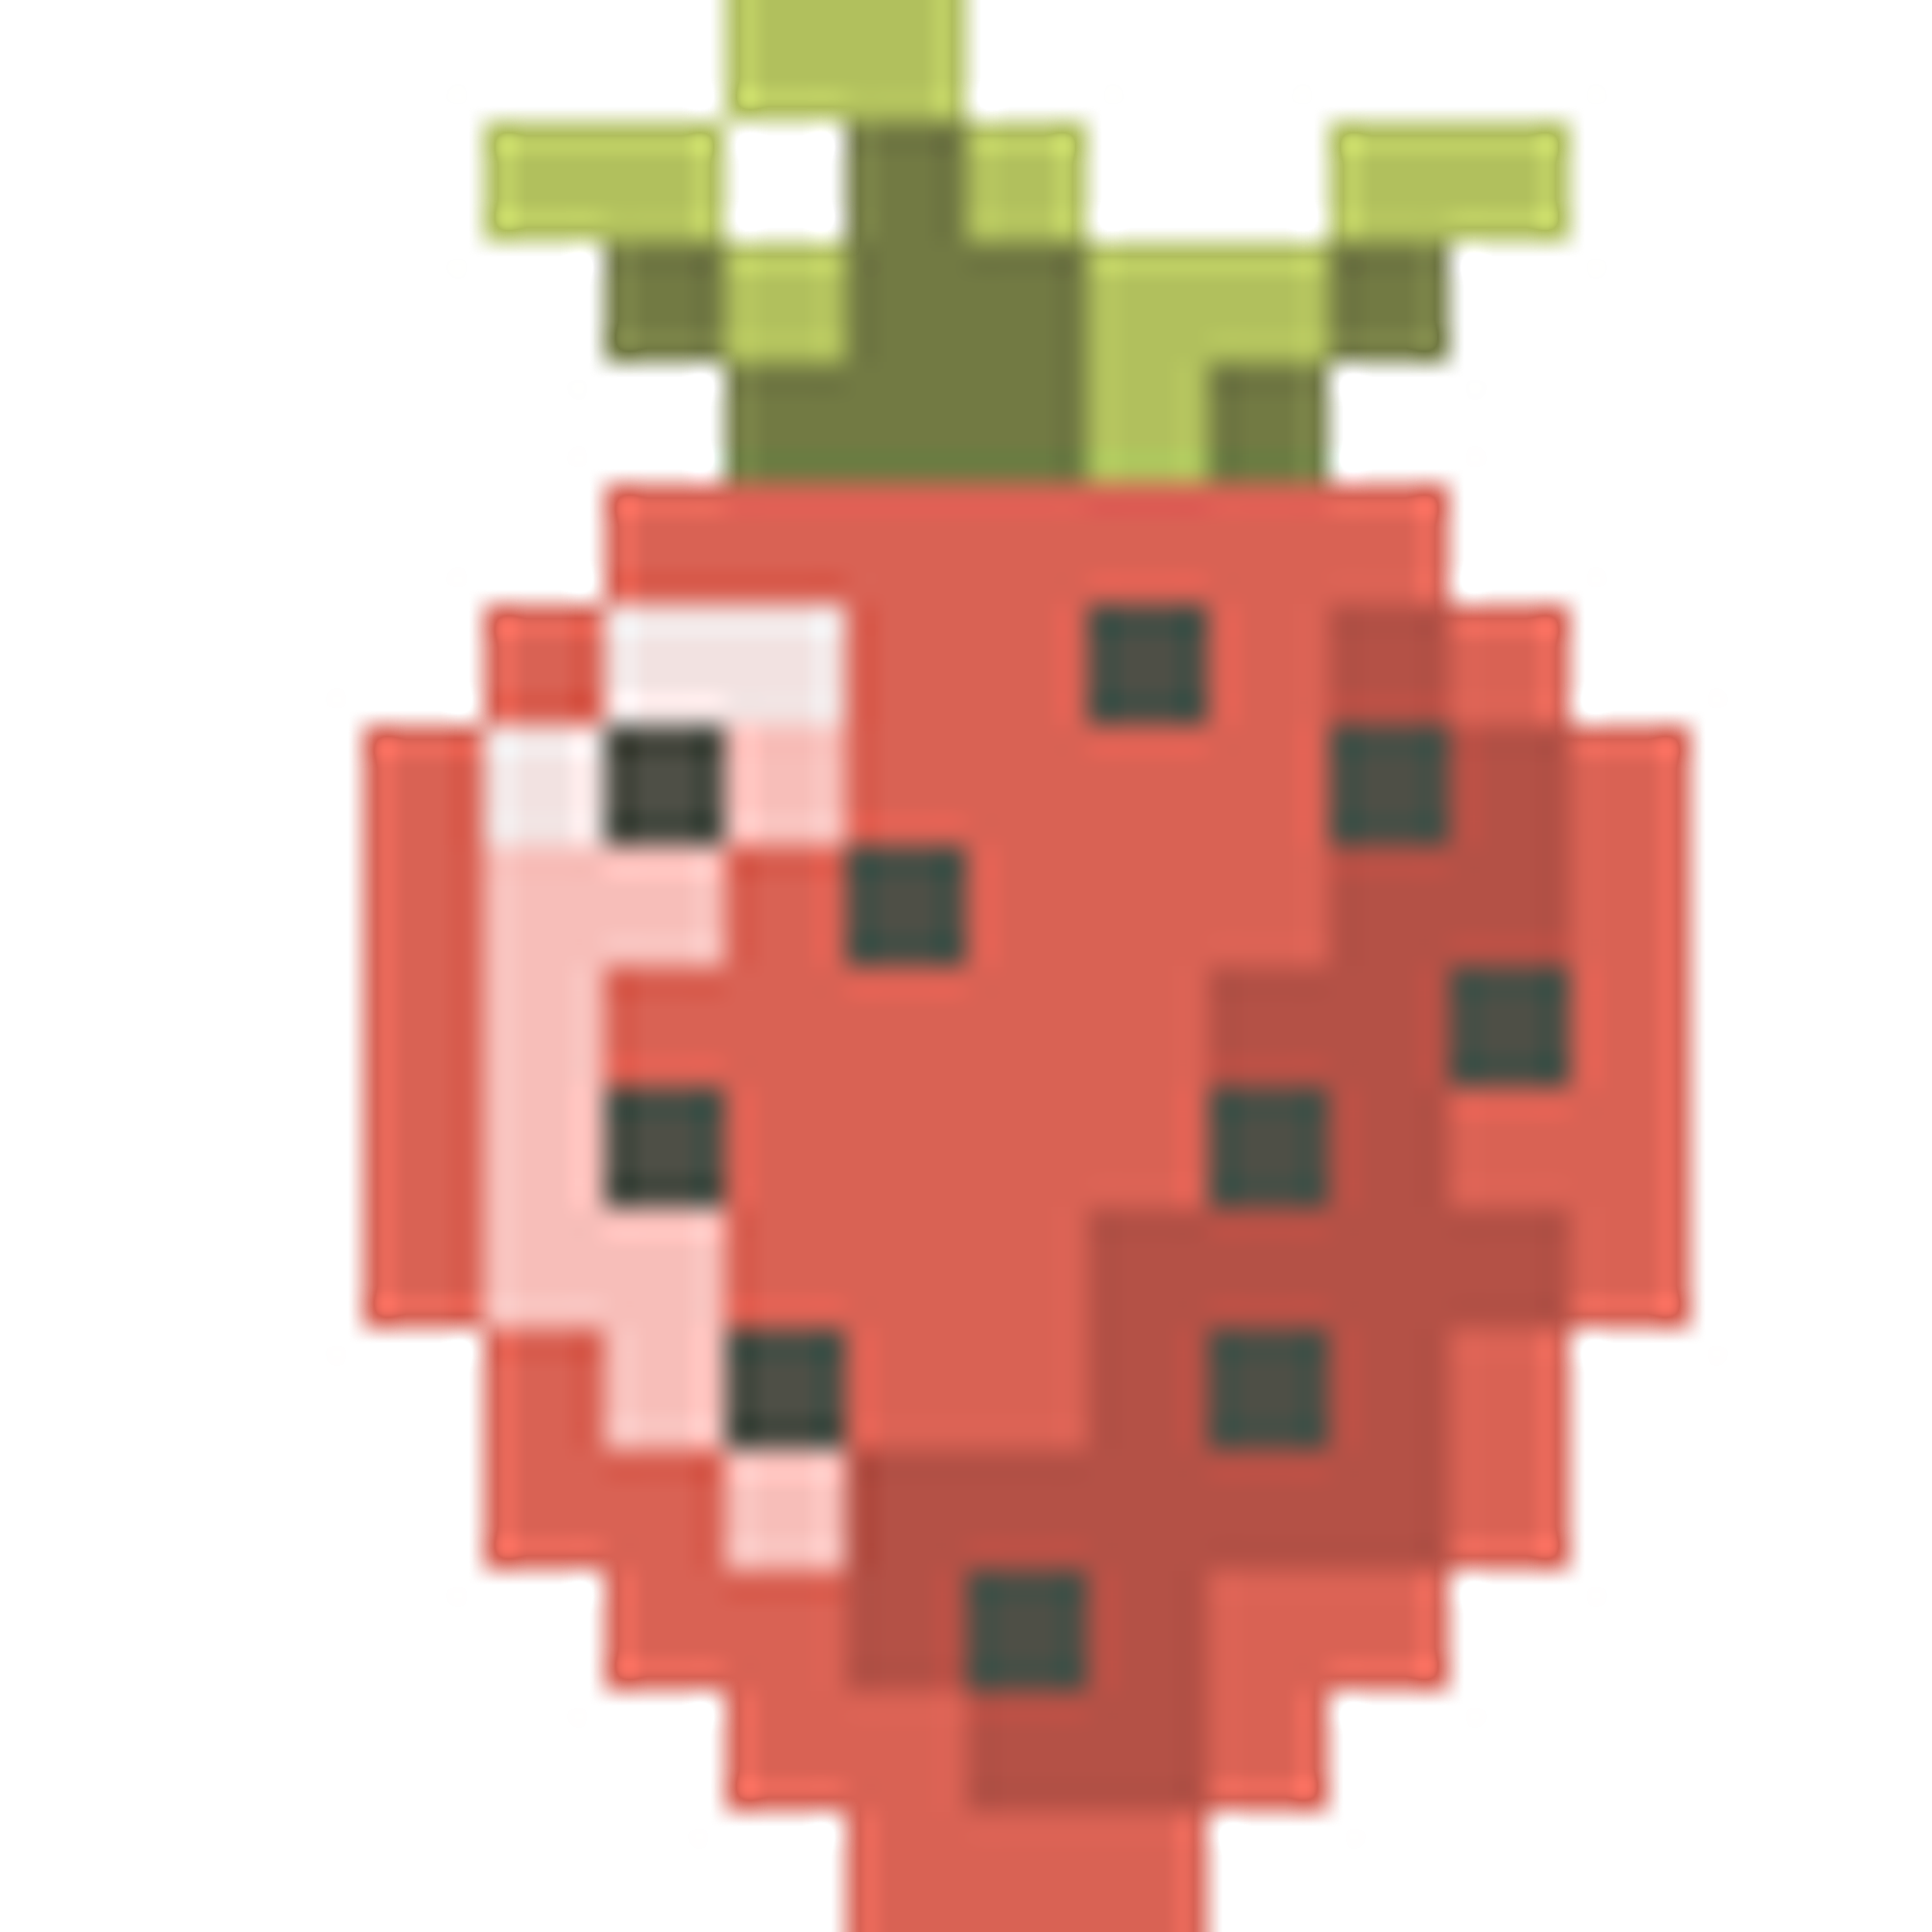 Strawberry - Zero-Dependency, Build-Free JavaScript Framework